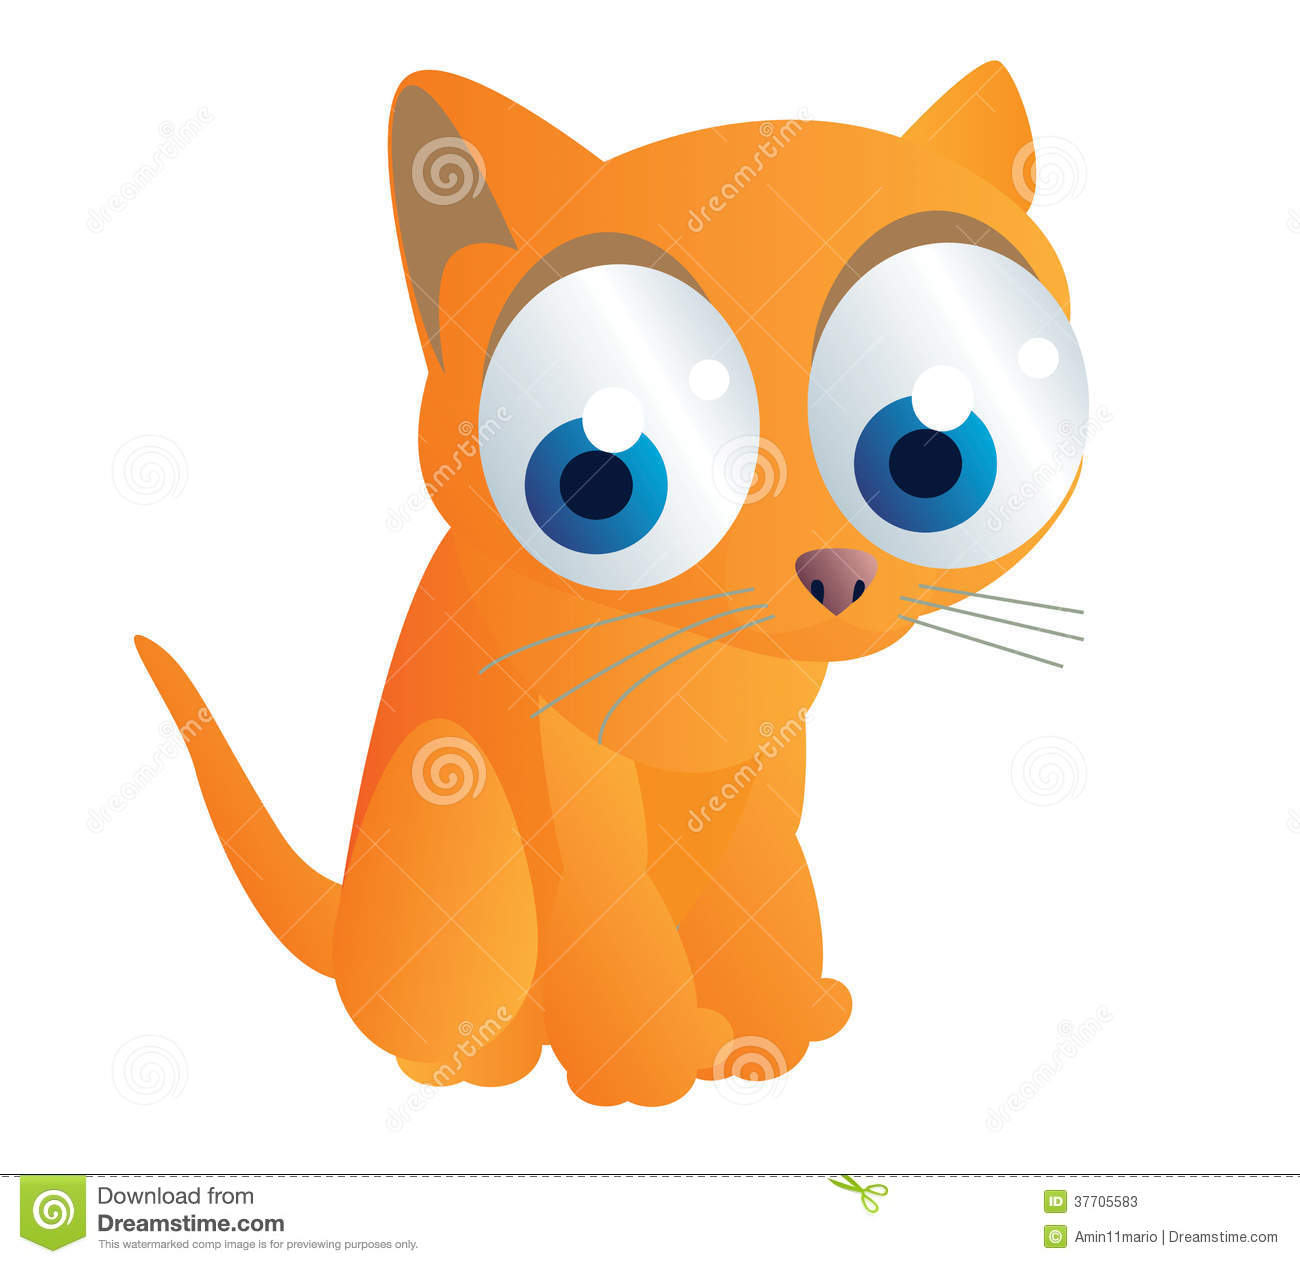 Cute cat cartoon stock illustration. Illustration of